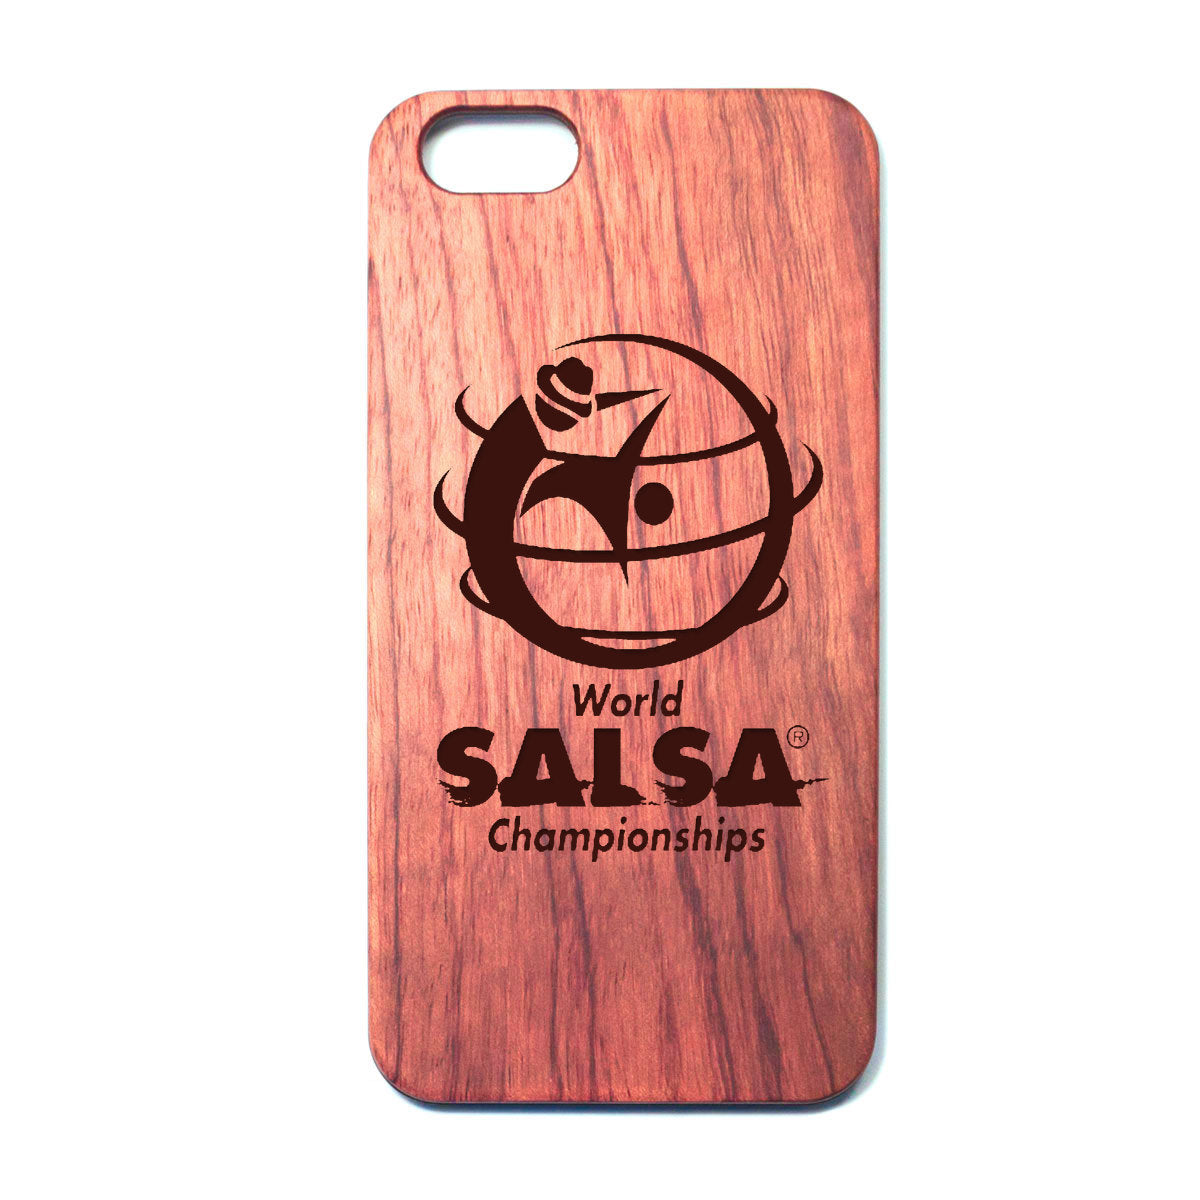 Wooden iPhone Case - World Salsa Championships